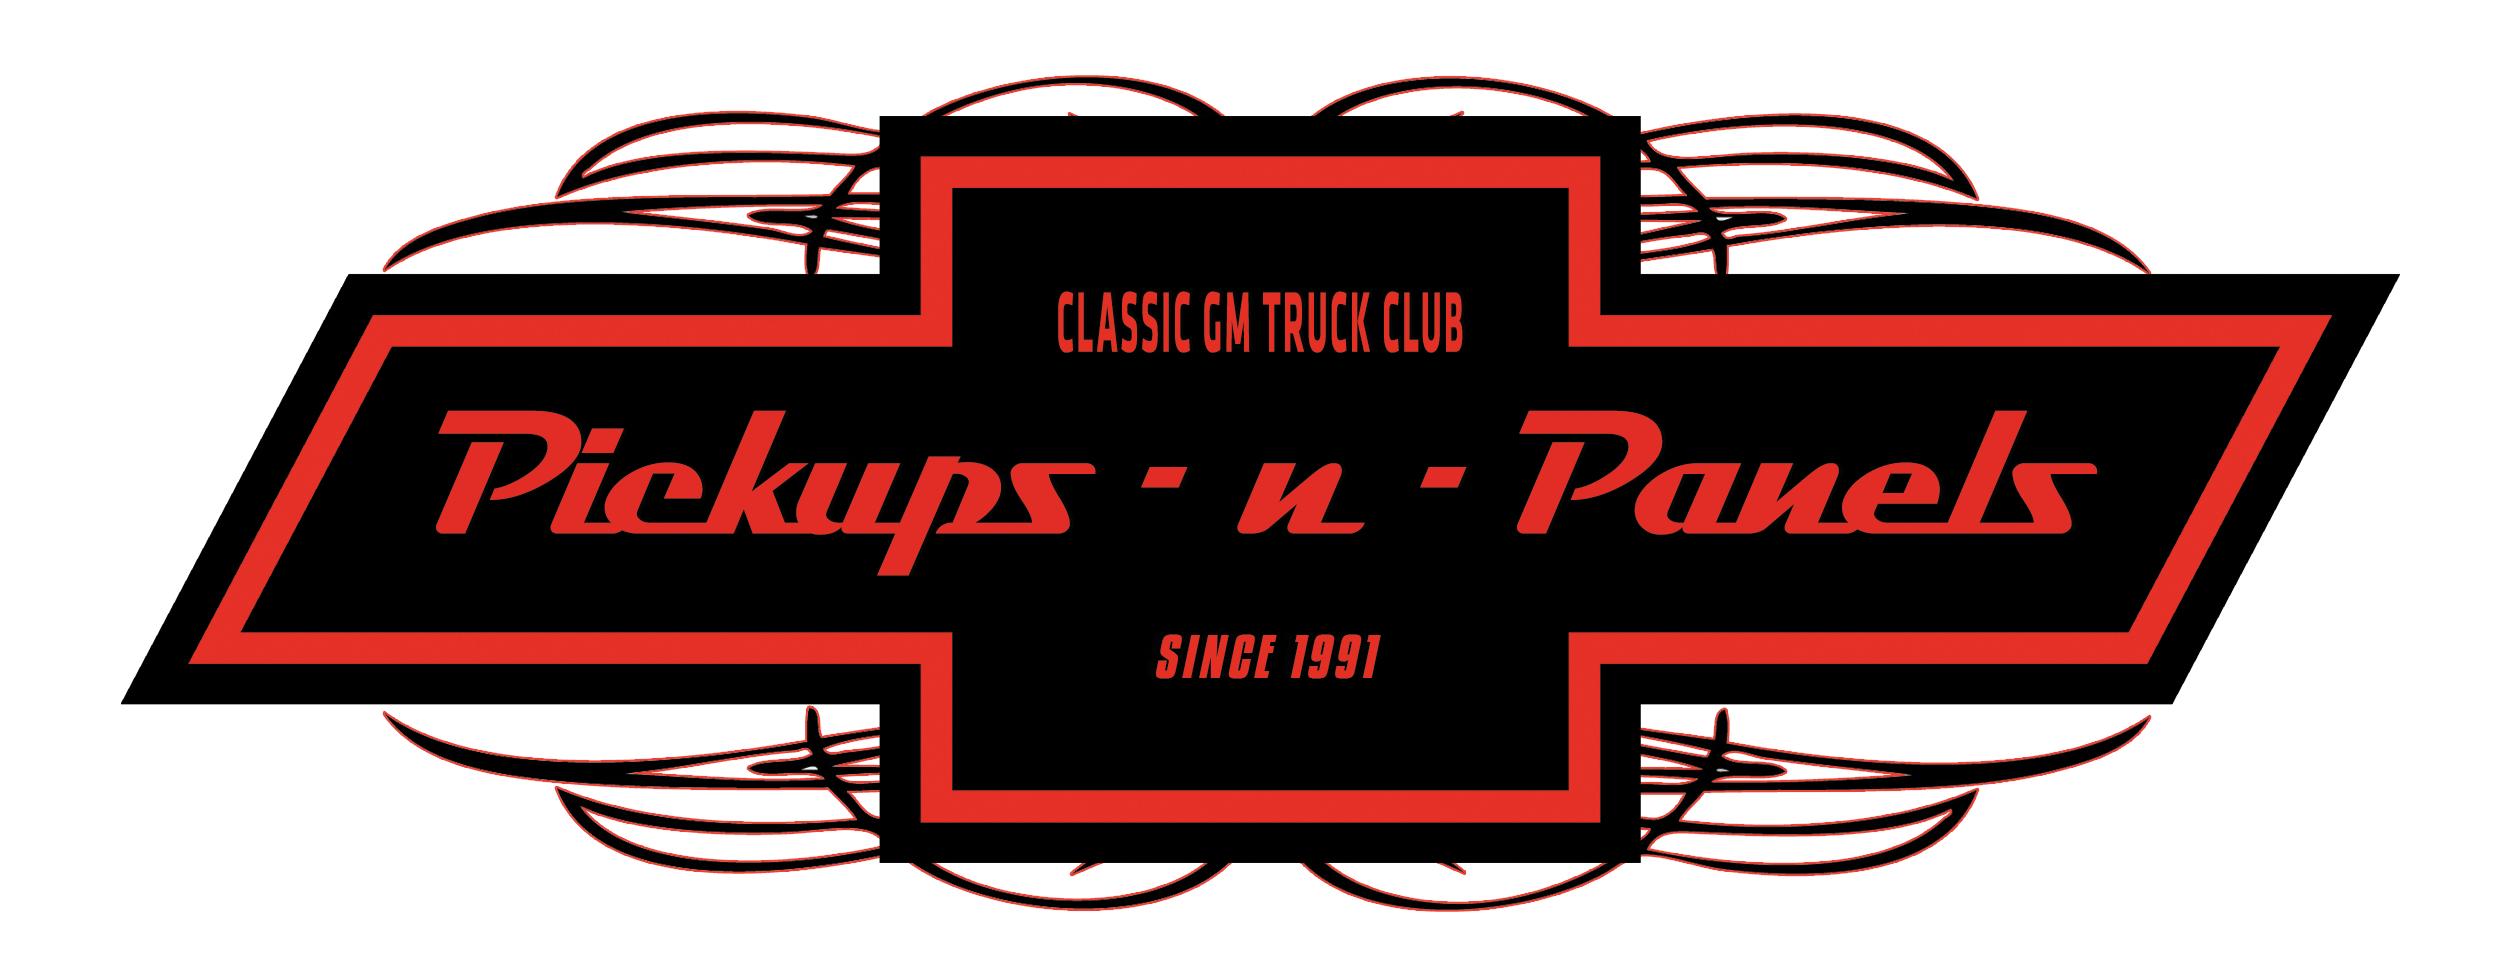 Truck Club Logo - Club Logos - Pickups-n-Panels Classic GM Truck Club